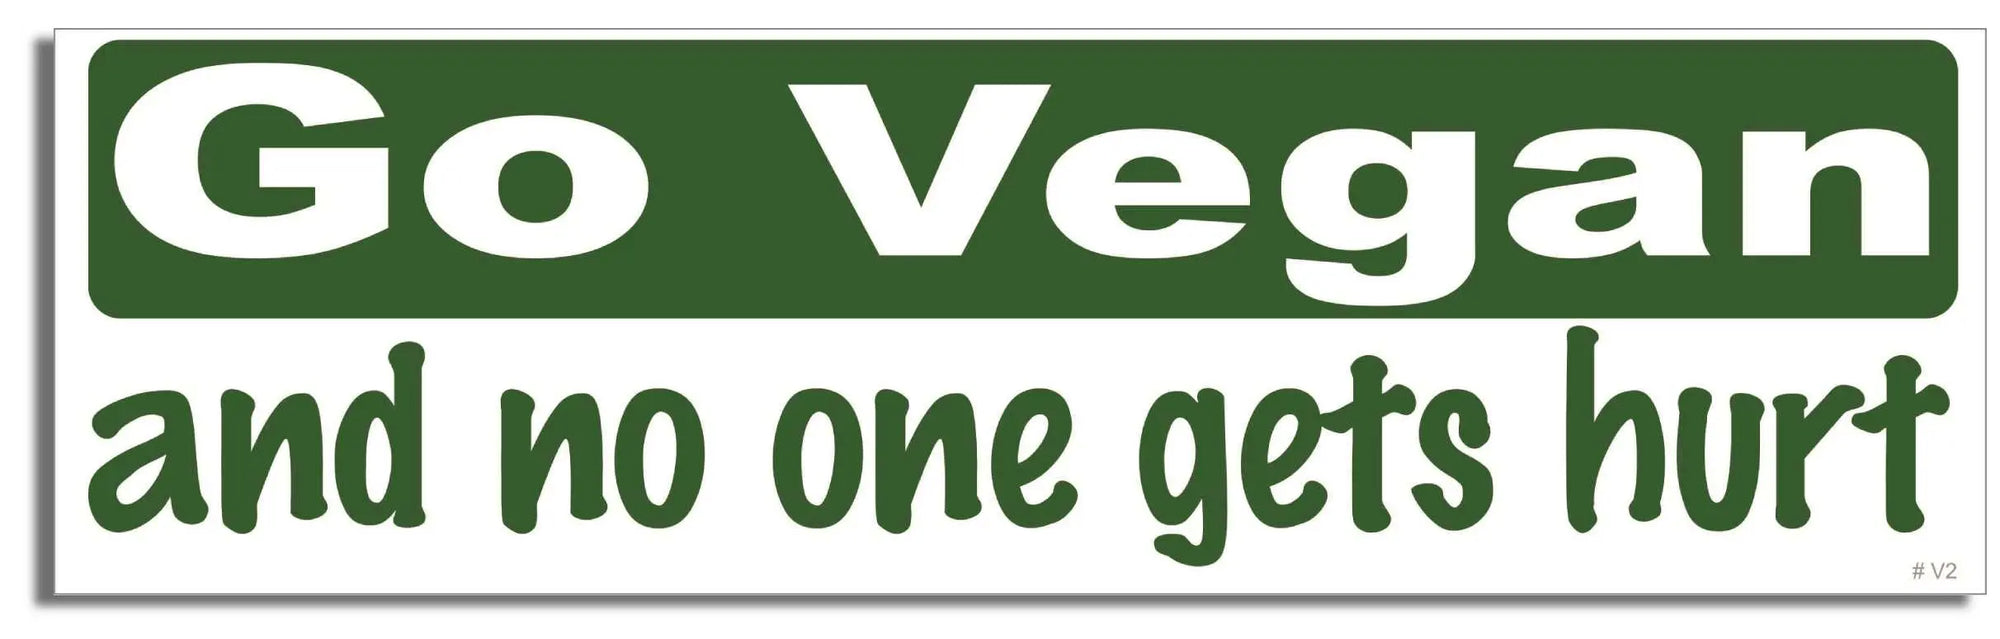 Go Vegan, And No One Gets Hurt - Vegetarian Bumper Sticker, Car Magnet